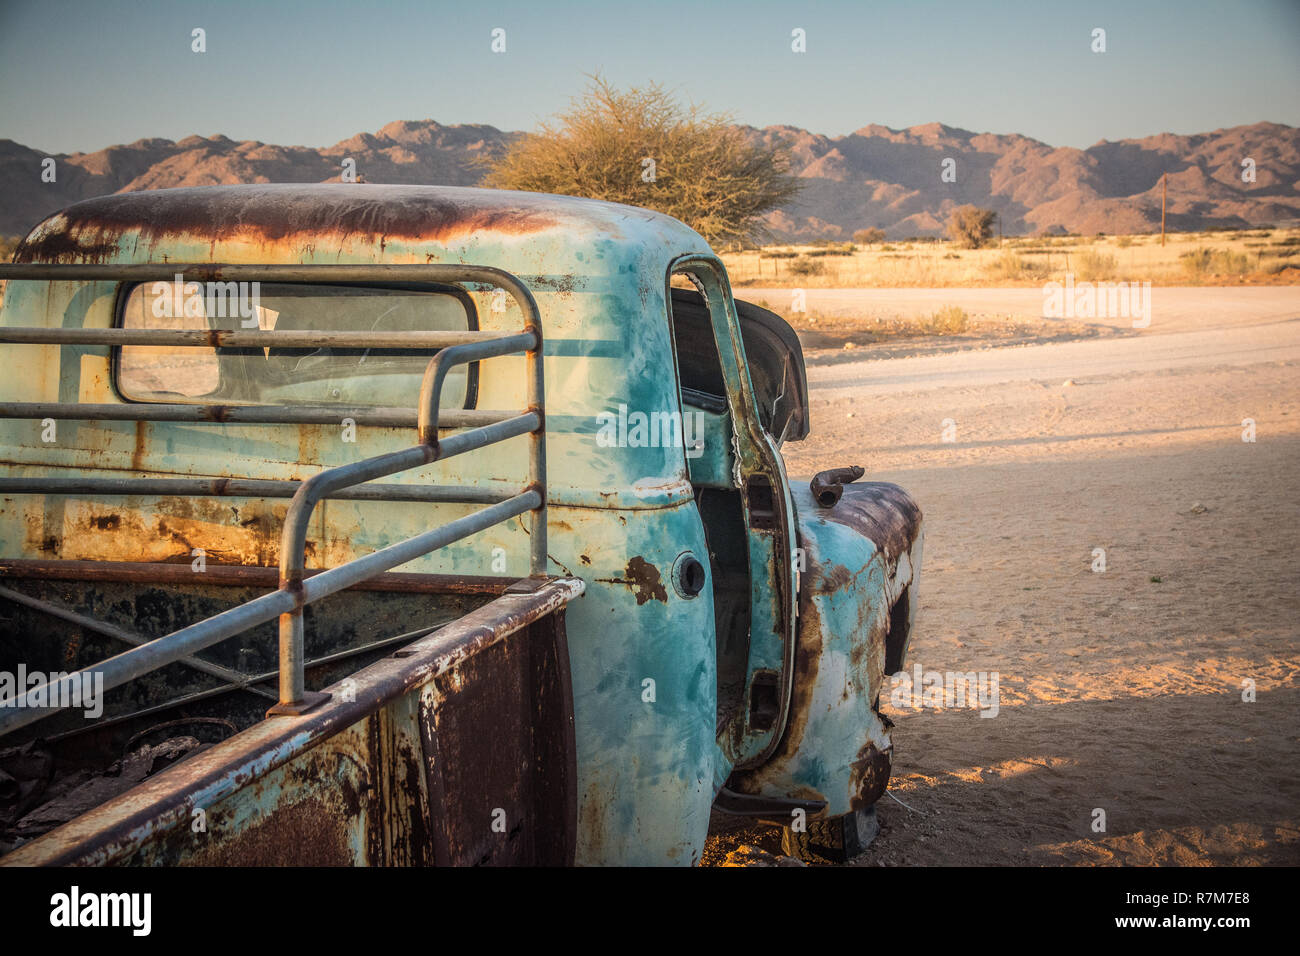 Old car wreck at Solitare, Namibia Stock Photo